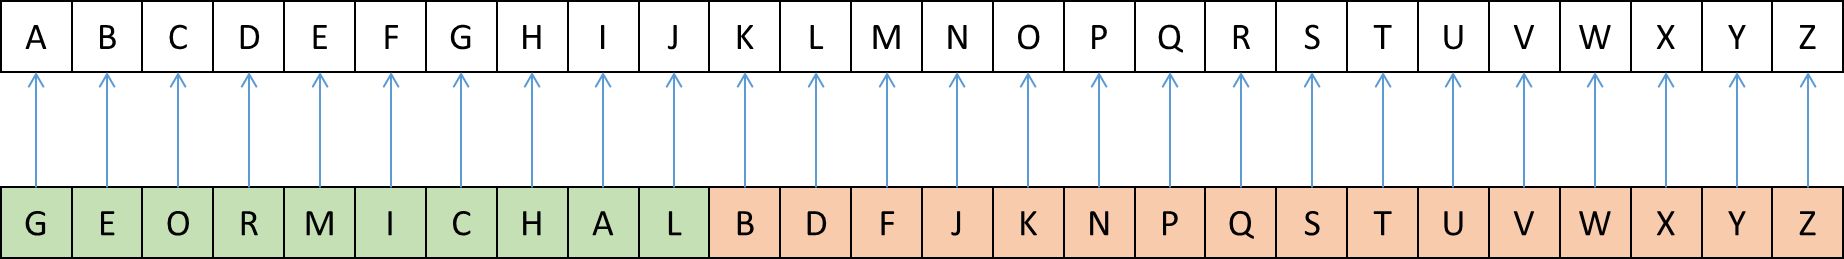 decode alphabet